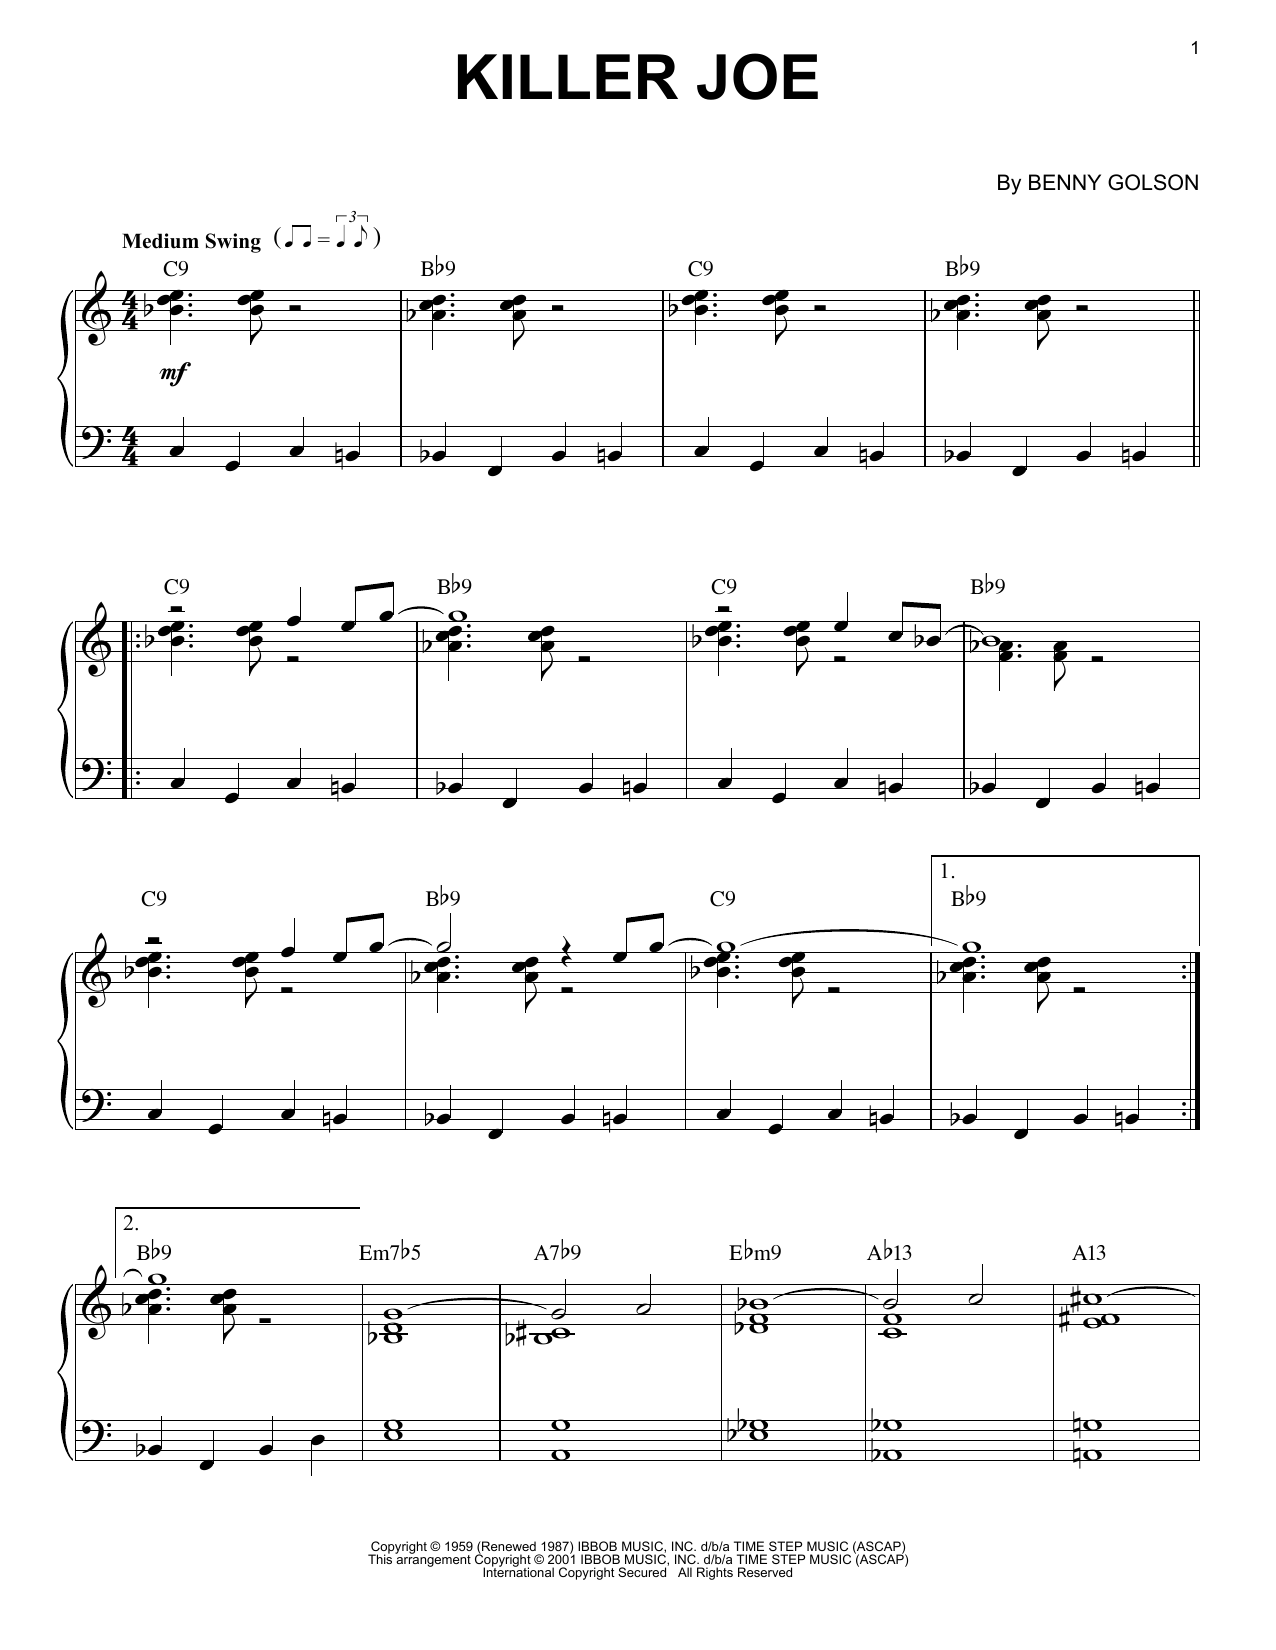 Benny Golson Killer Joe Sheet Music Notes & Chords for Piano Solo - Download or Print PDF